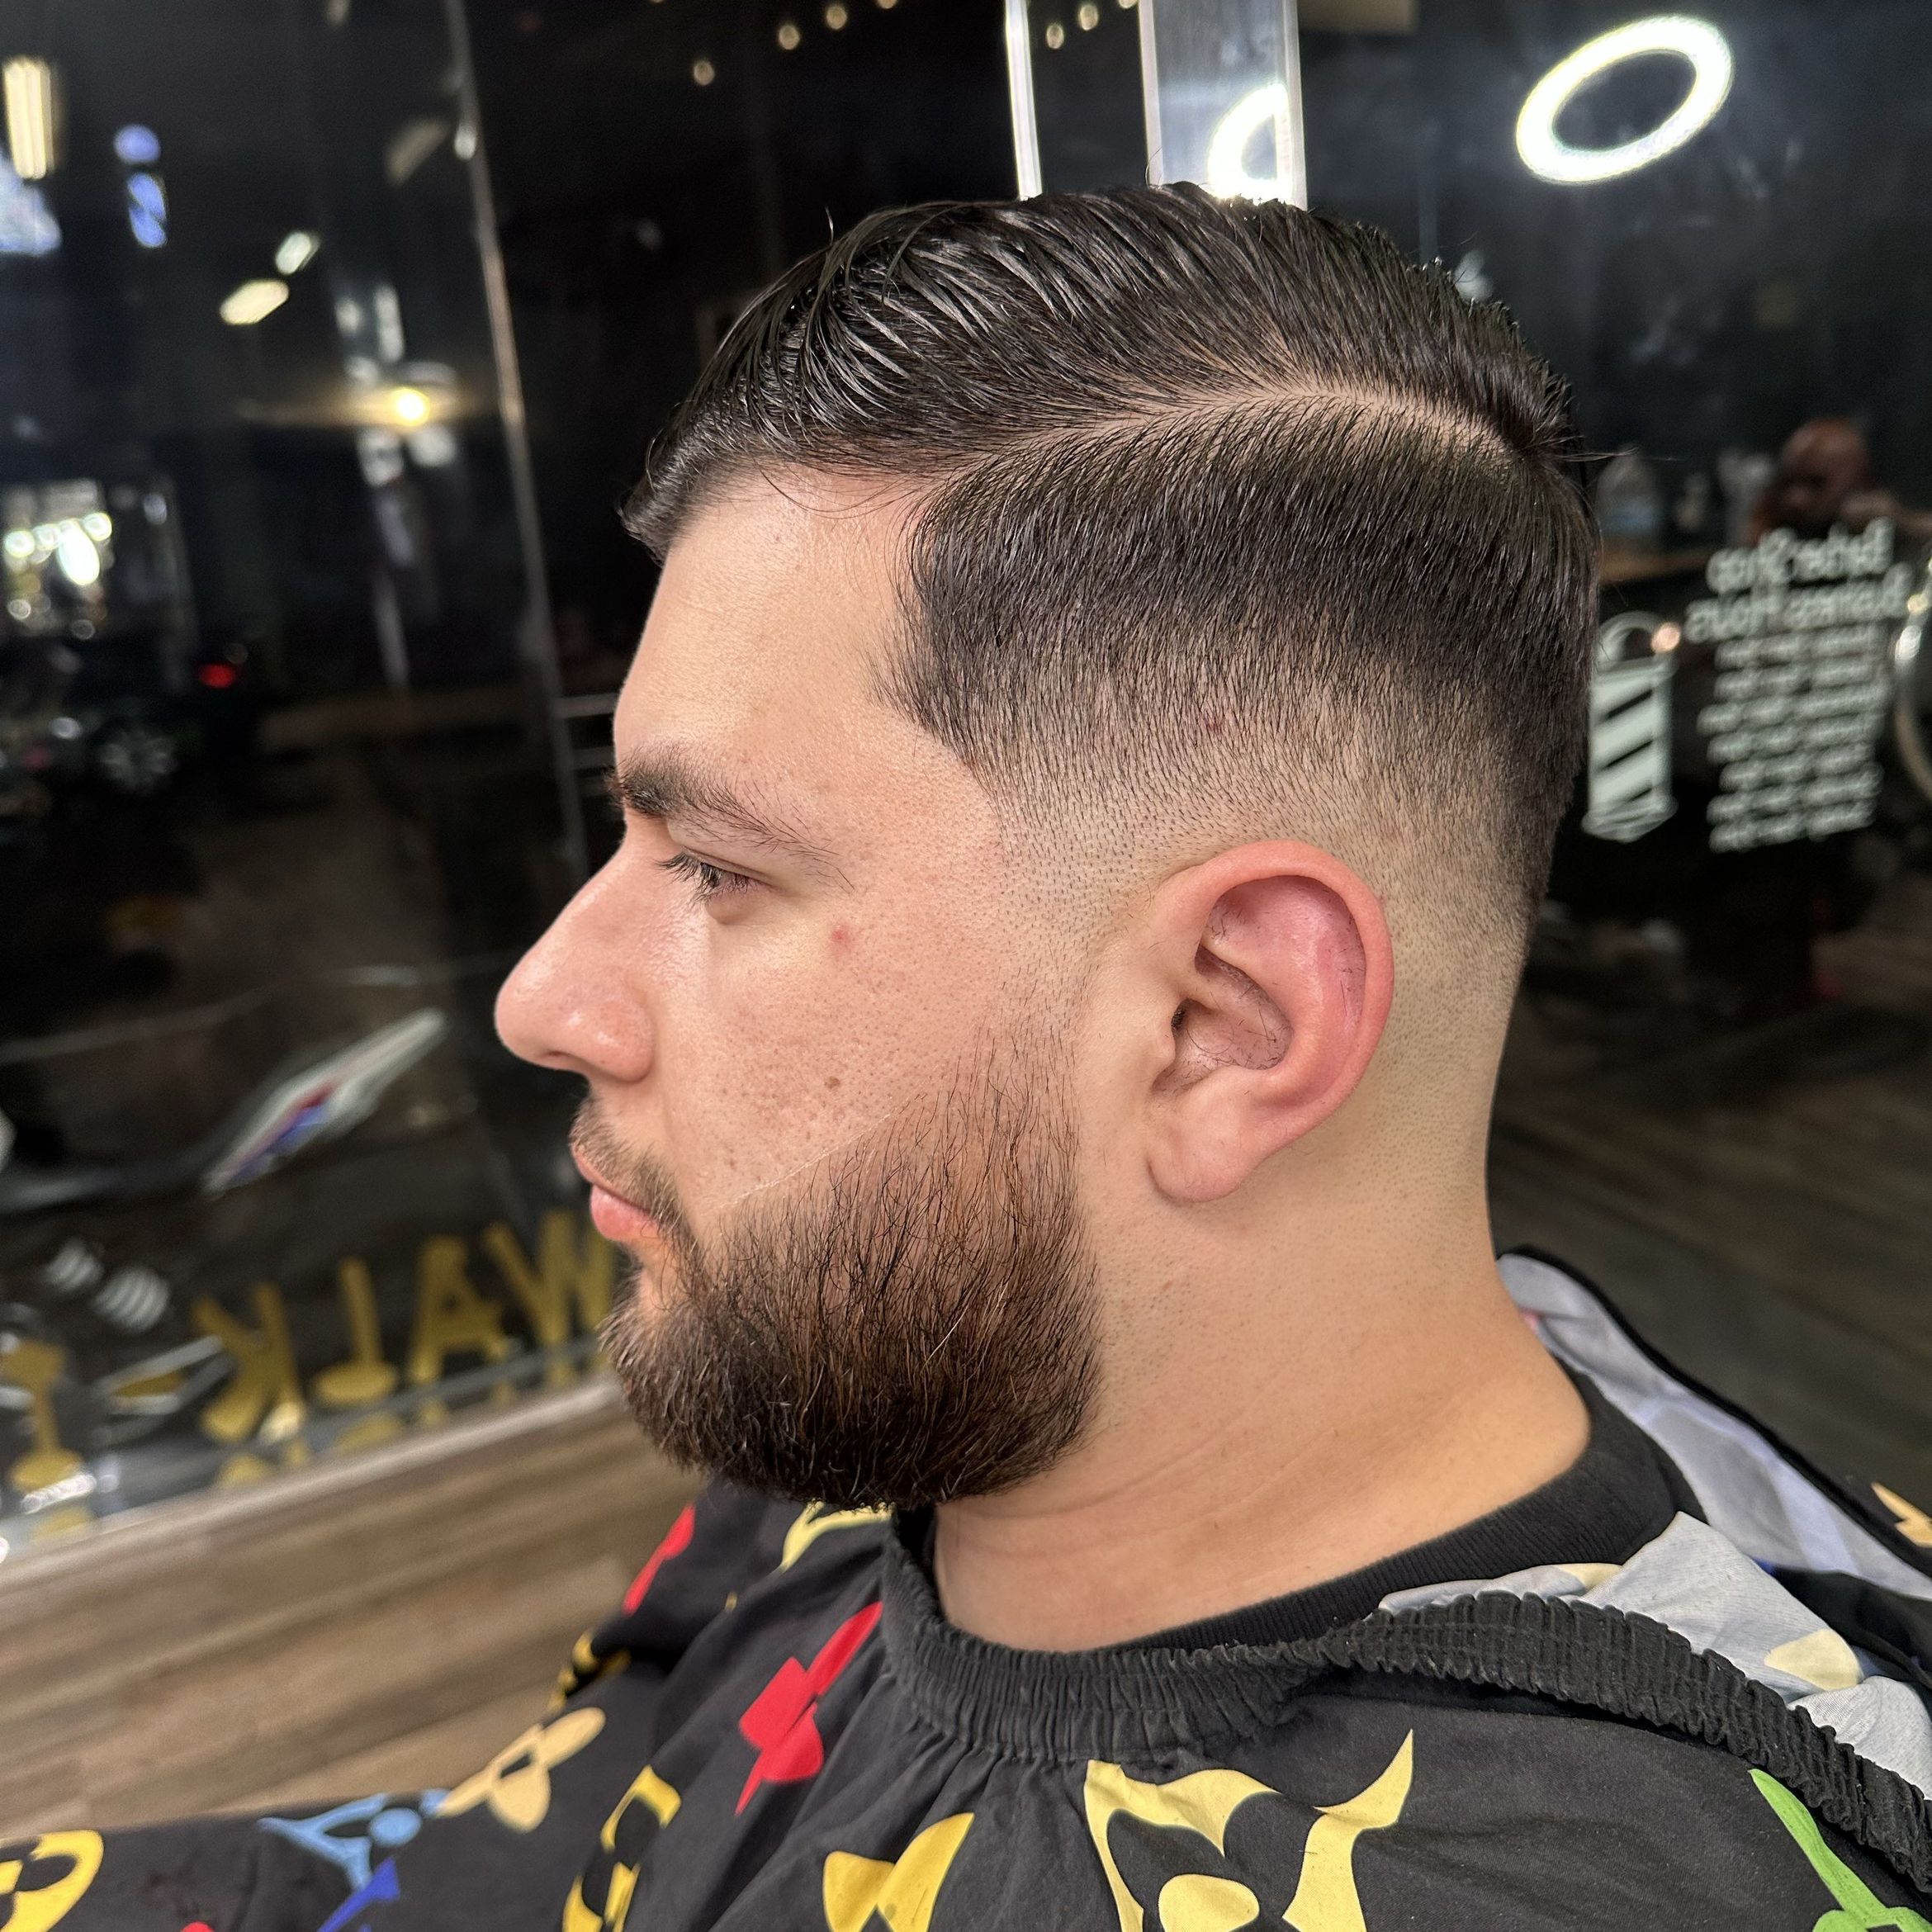 Haircut and beard⭐️ portfolio